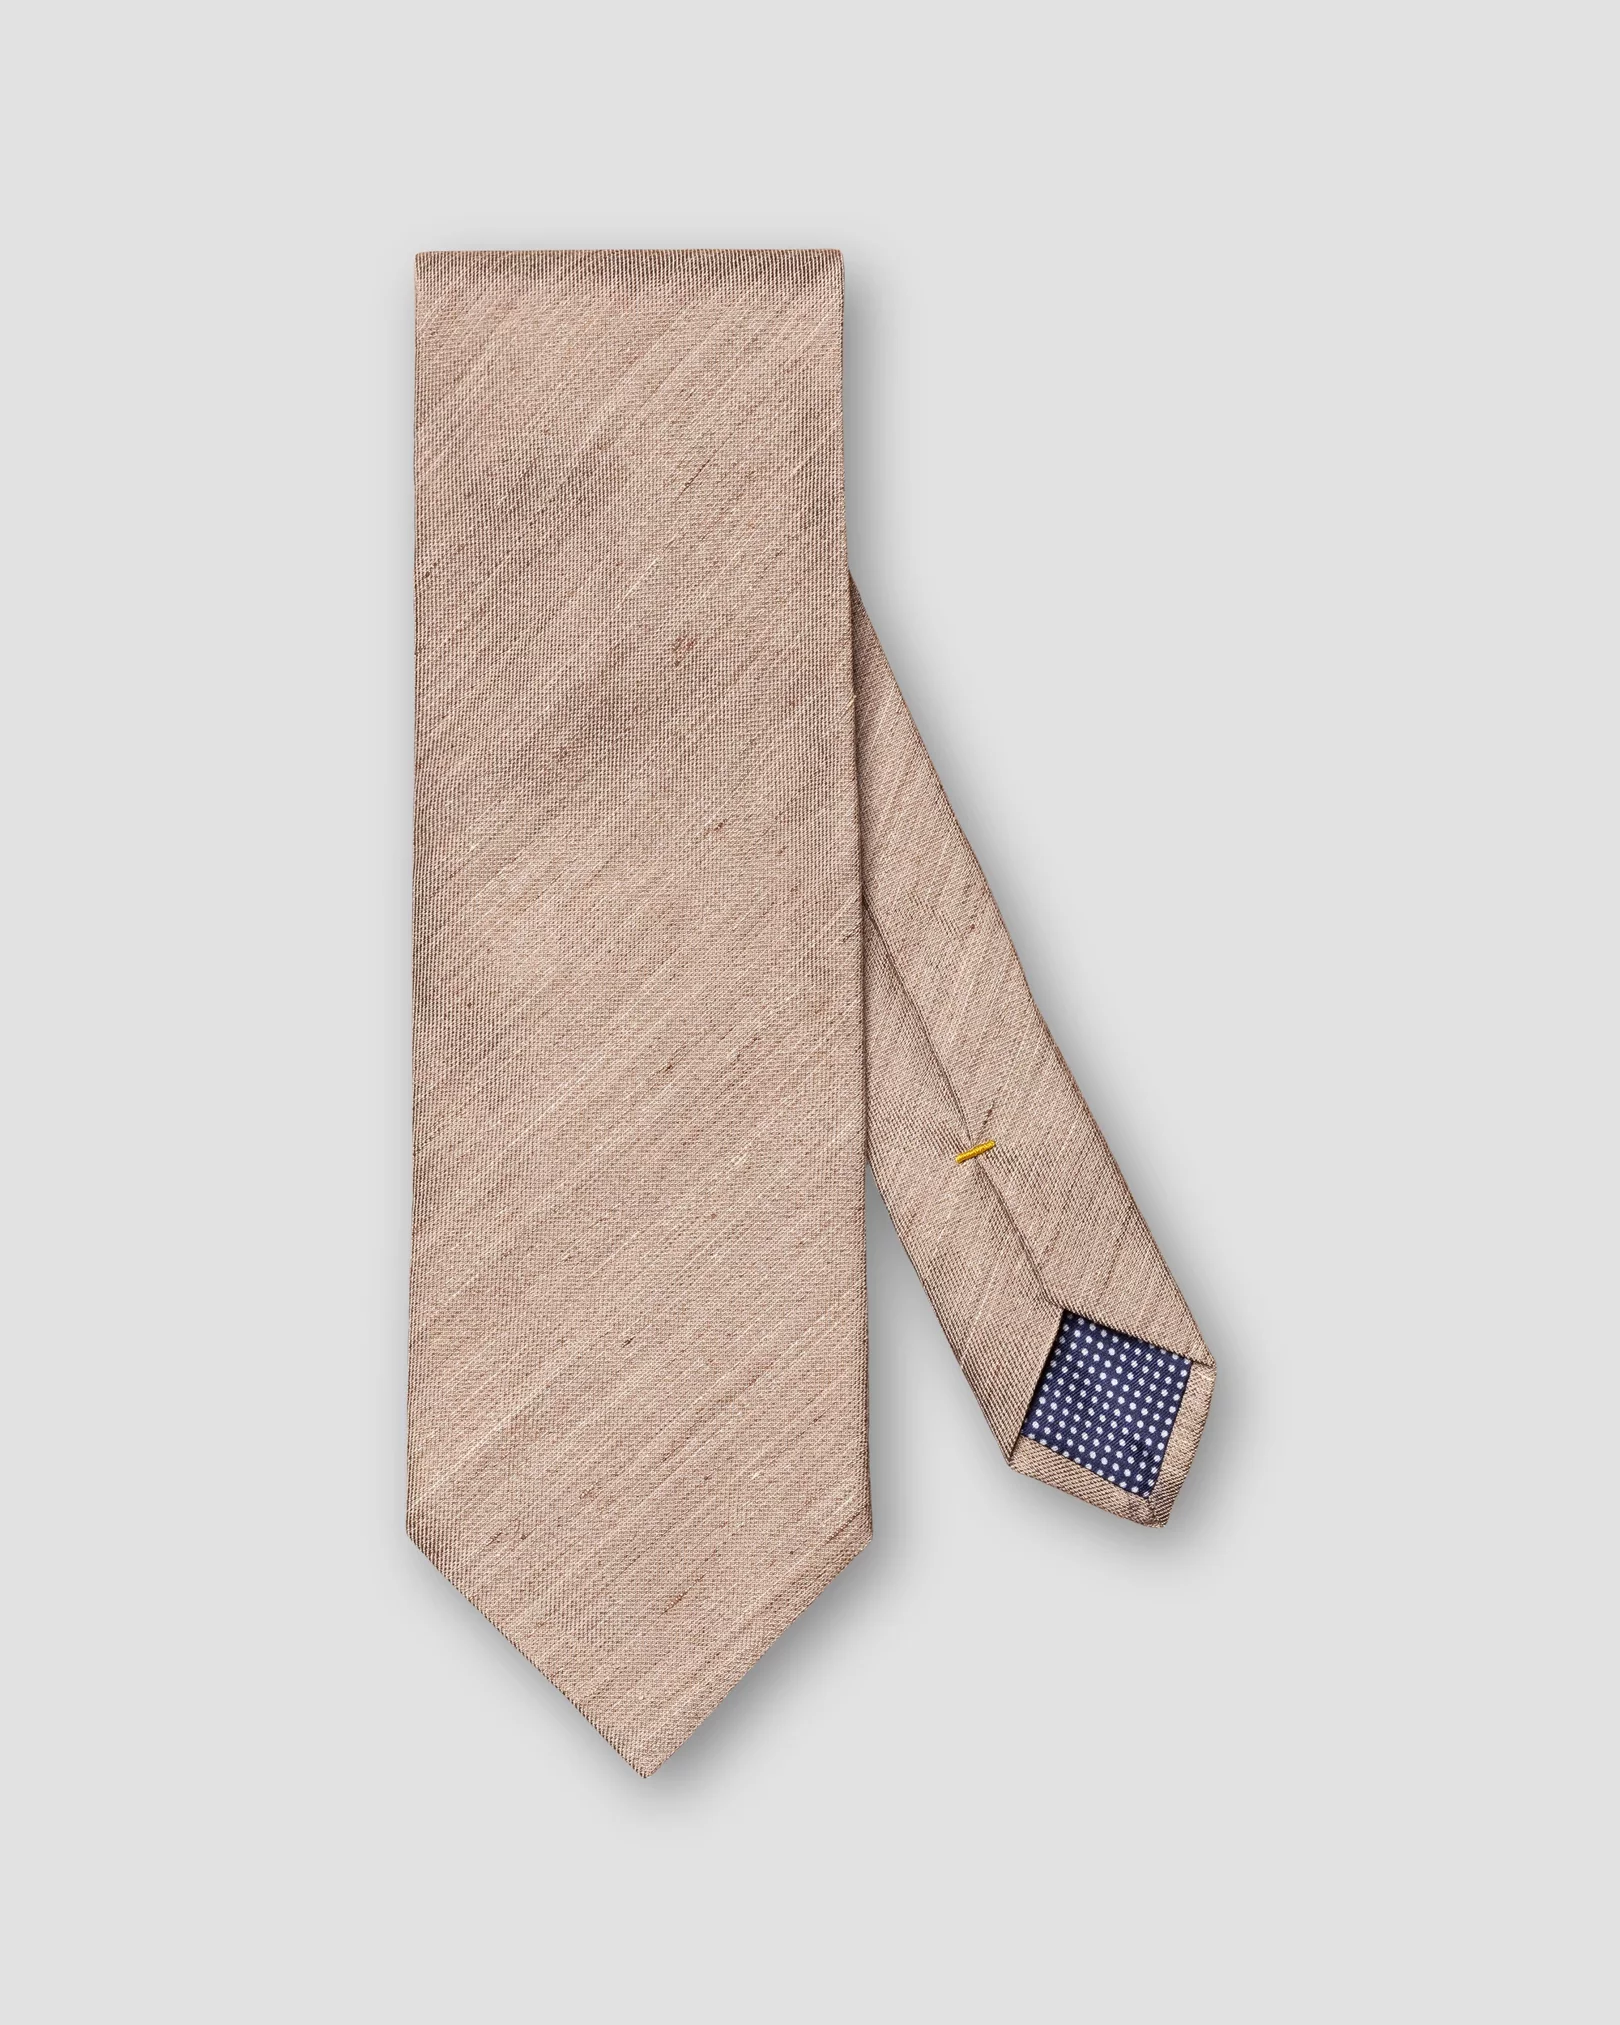 Eton - light brown tie